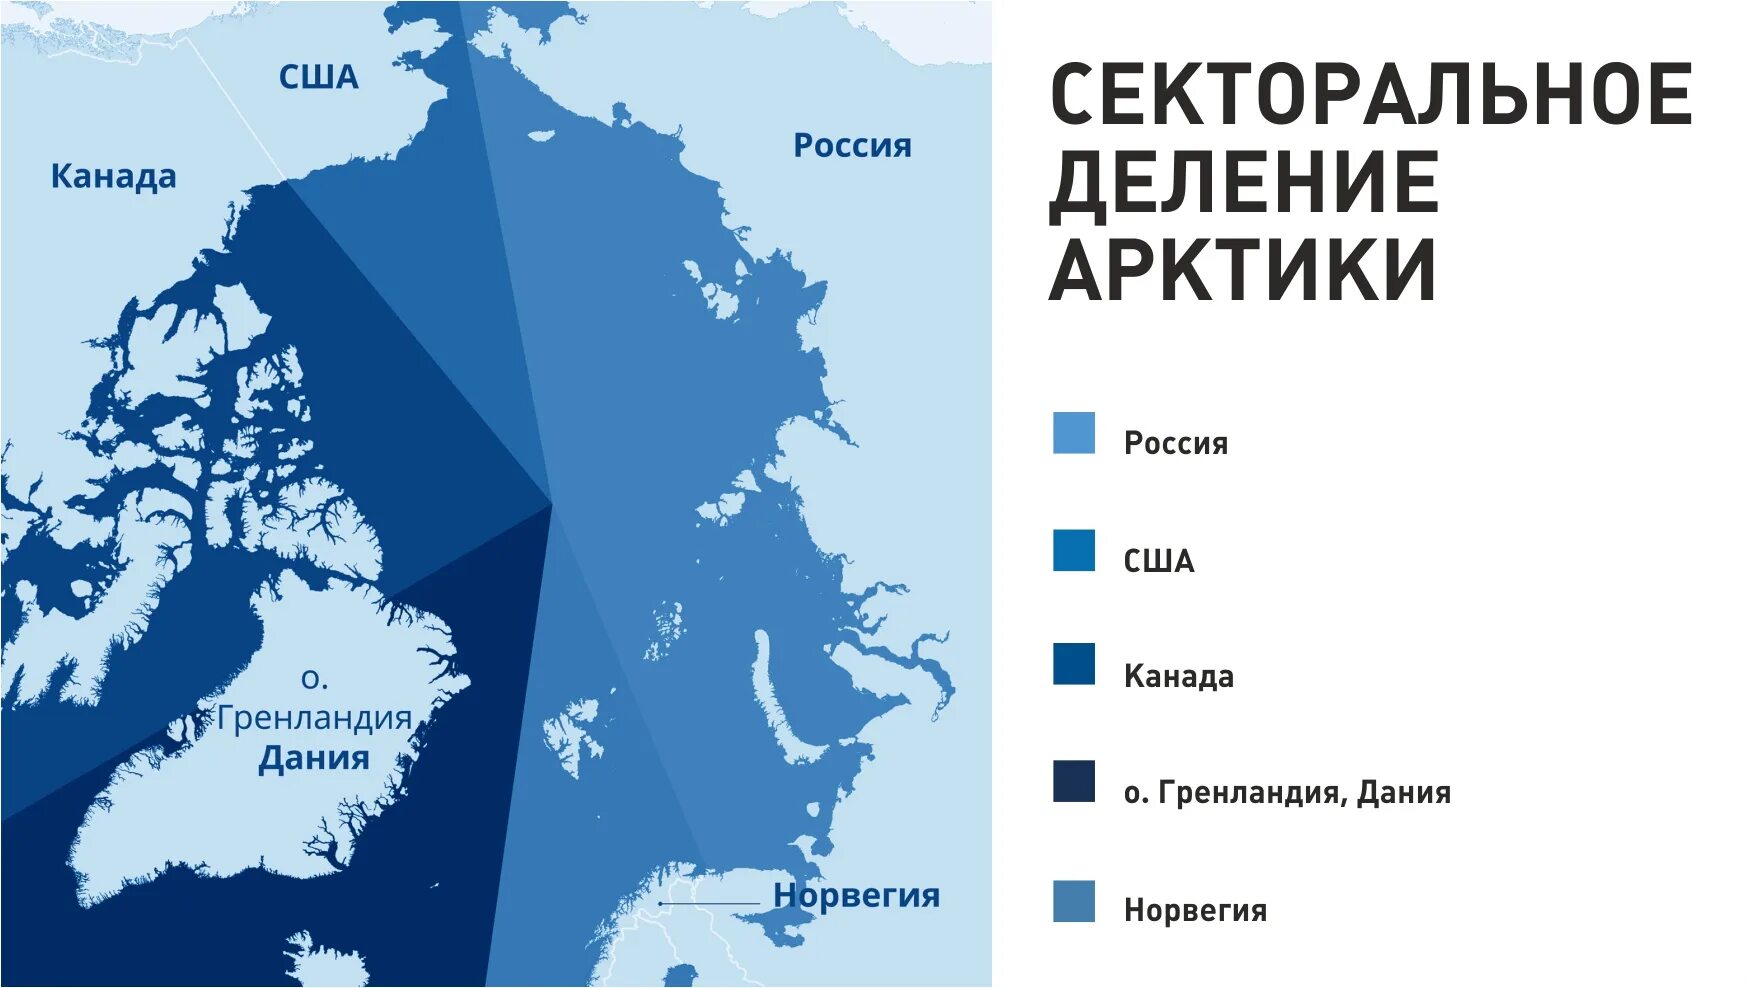 Arctic countries. Арктика хребет Ломоносова. Арктика на карте. Арктический шельф. Сектора Арктики.